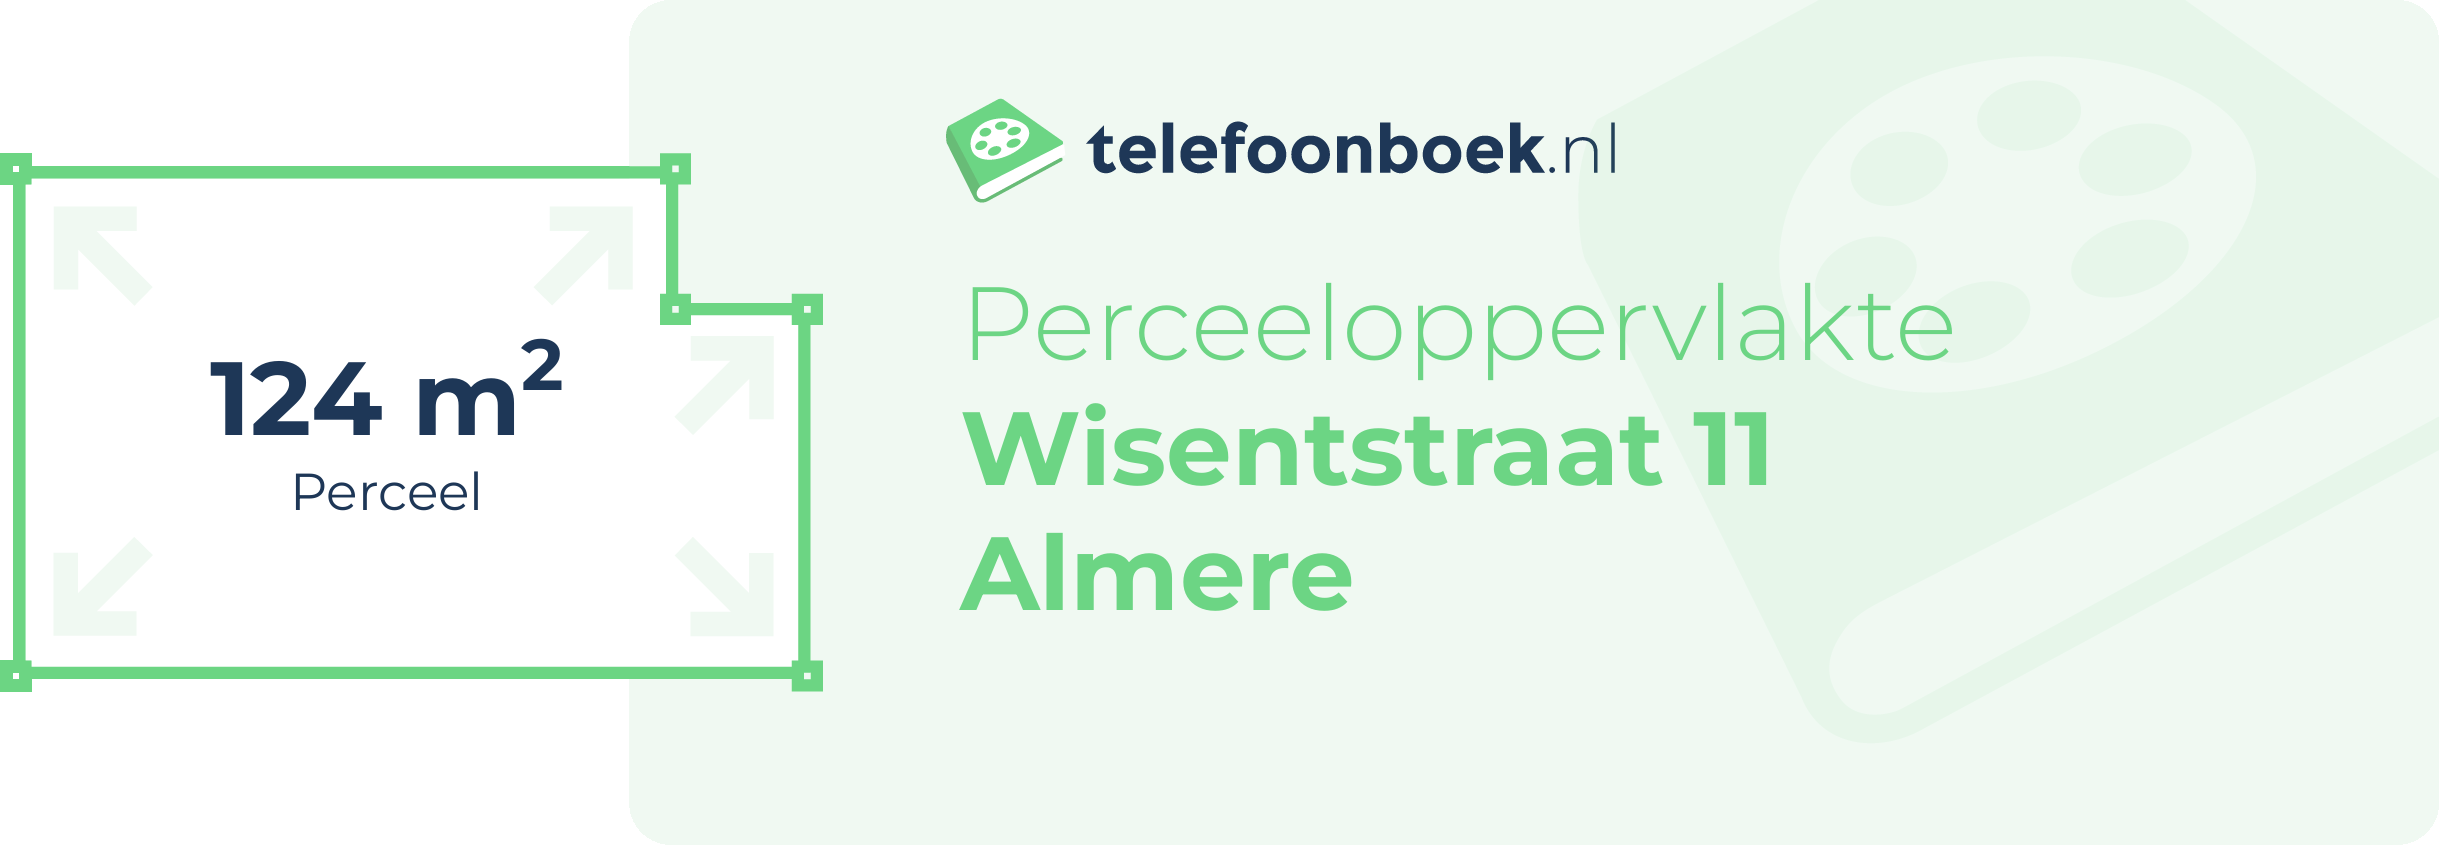 Perceeloppervlakte Wisentstraat 11 Almere